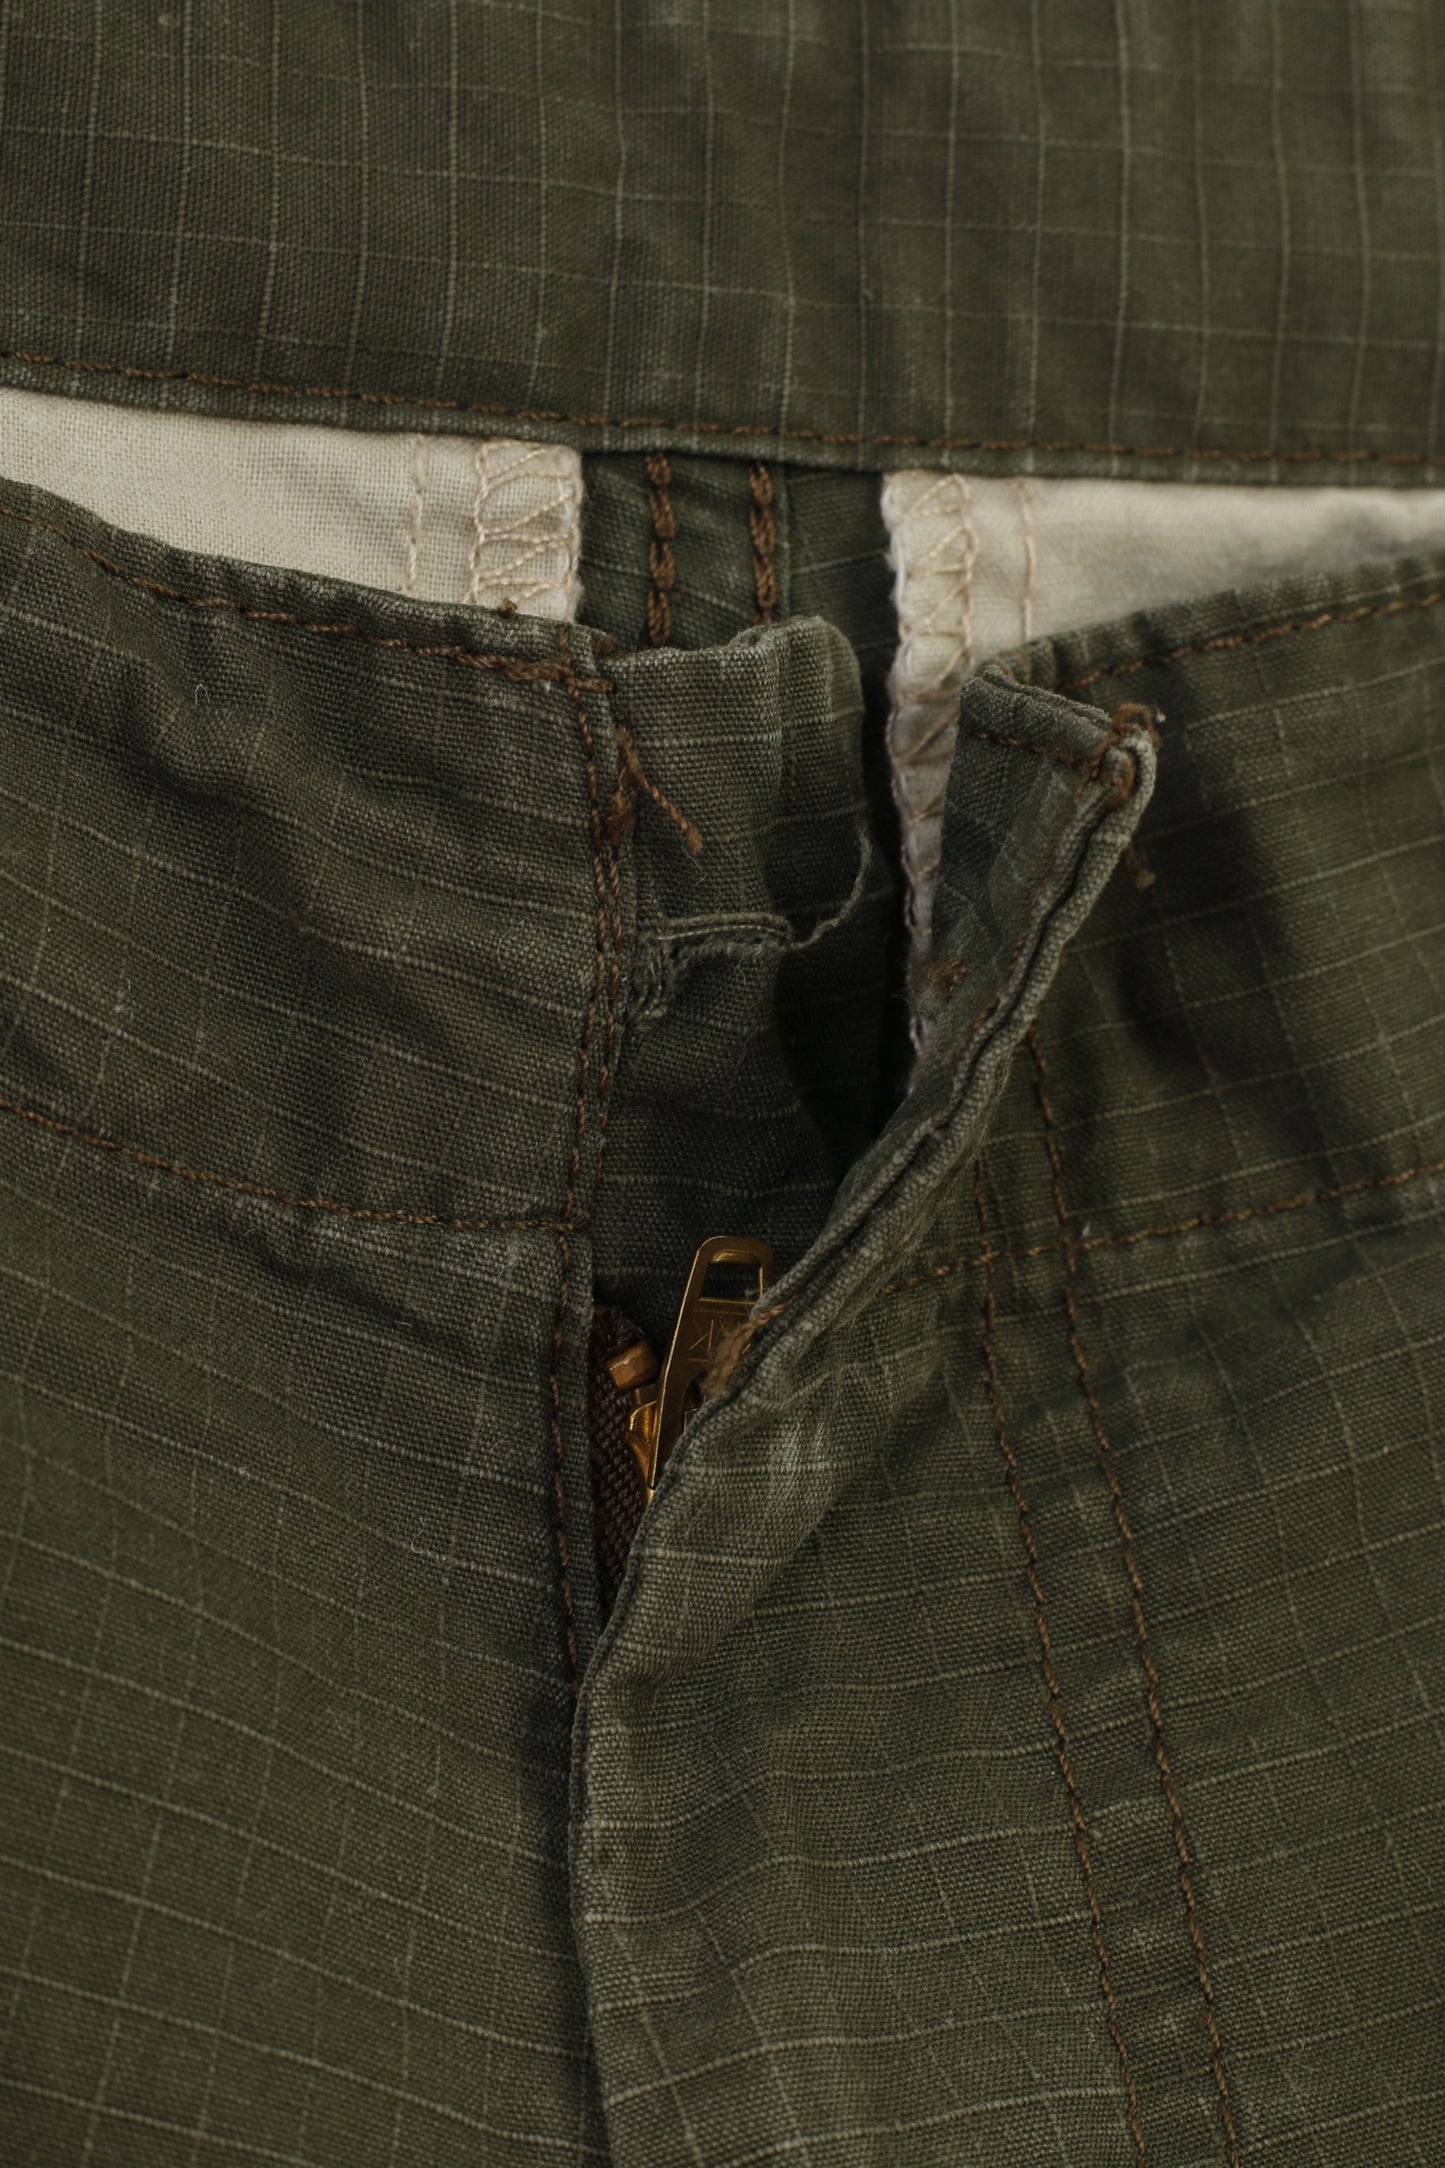 Carhartt Men M Trousers Khaki Wide Leg Vintage Pockets Pants